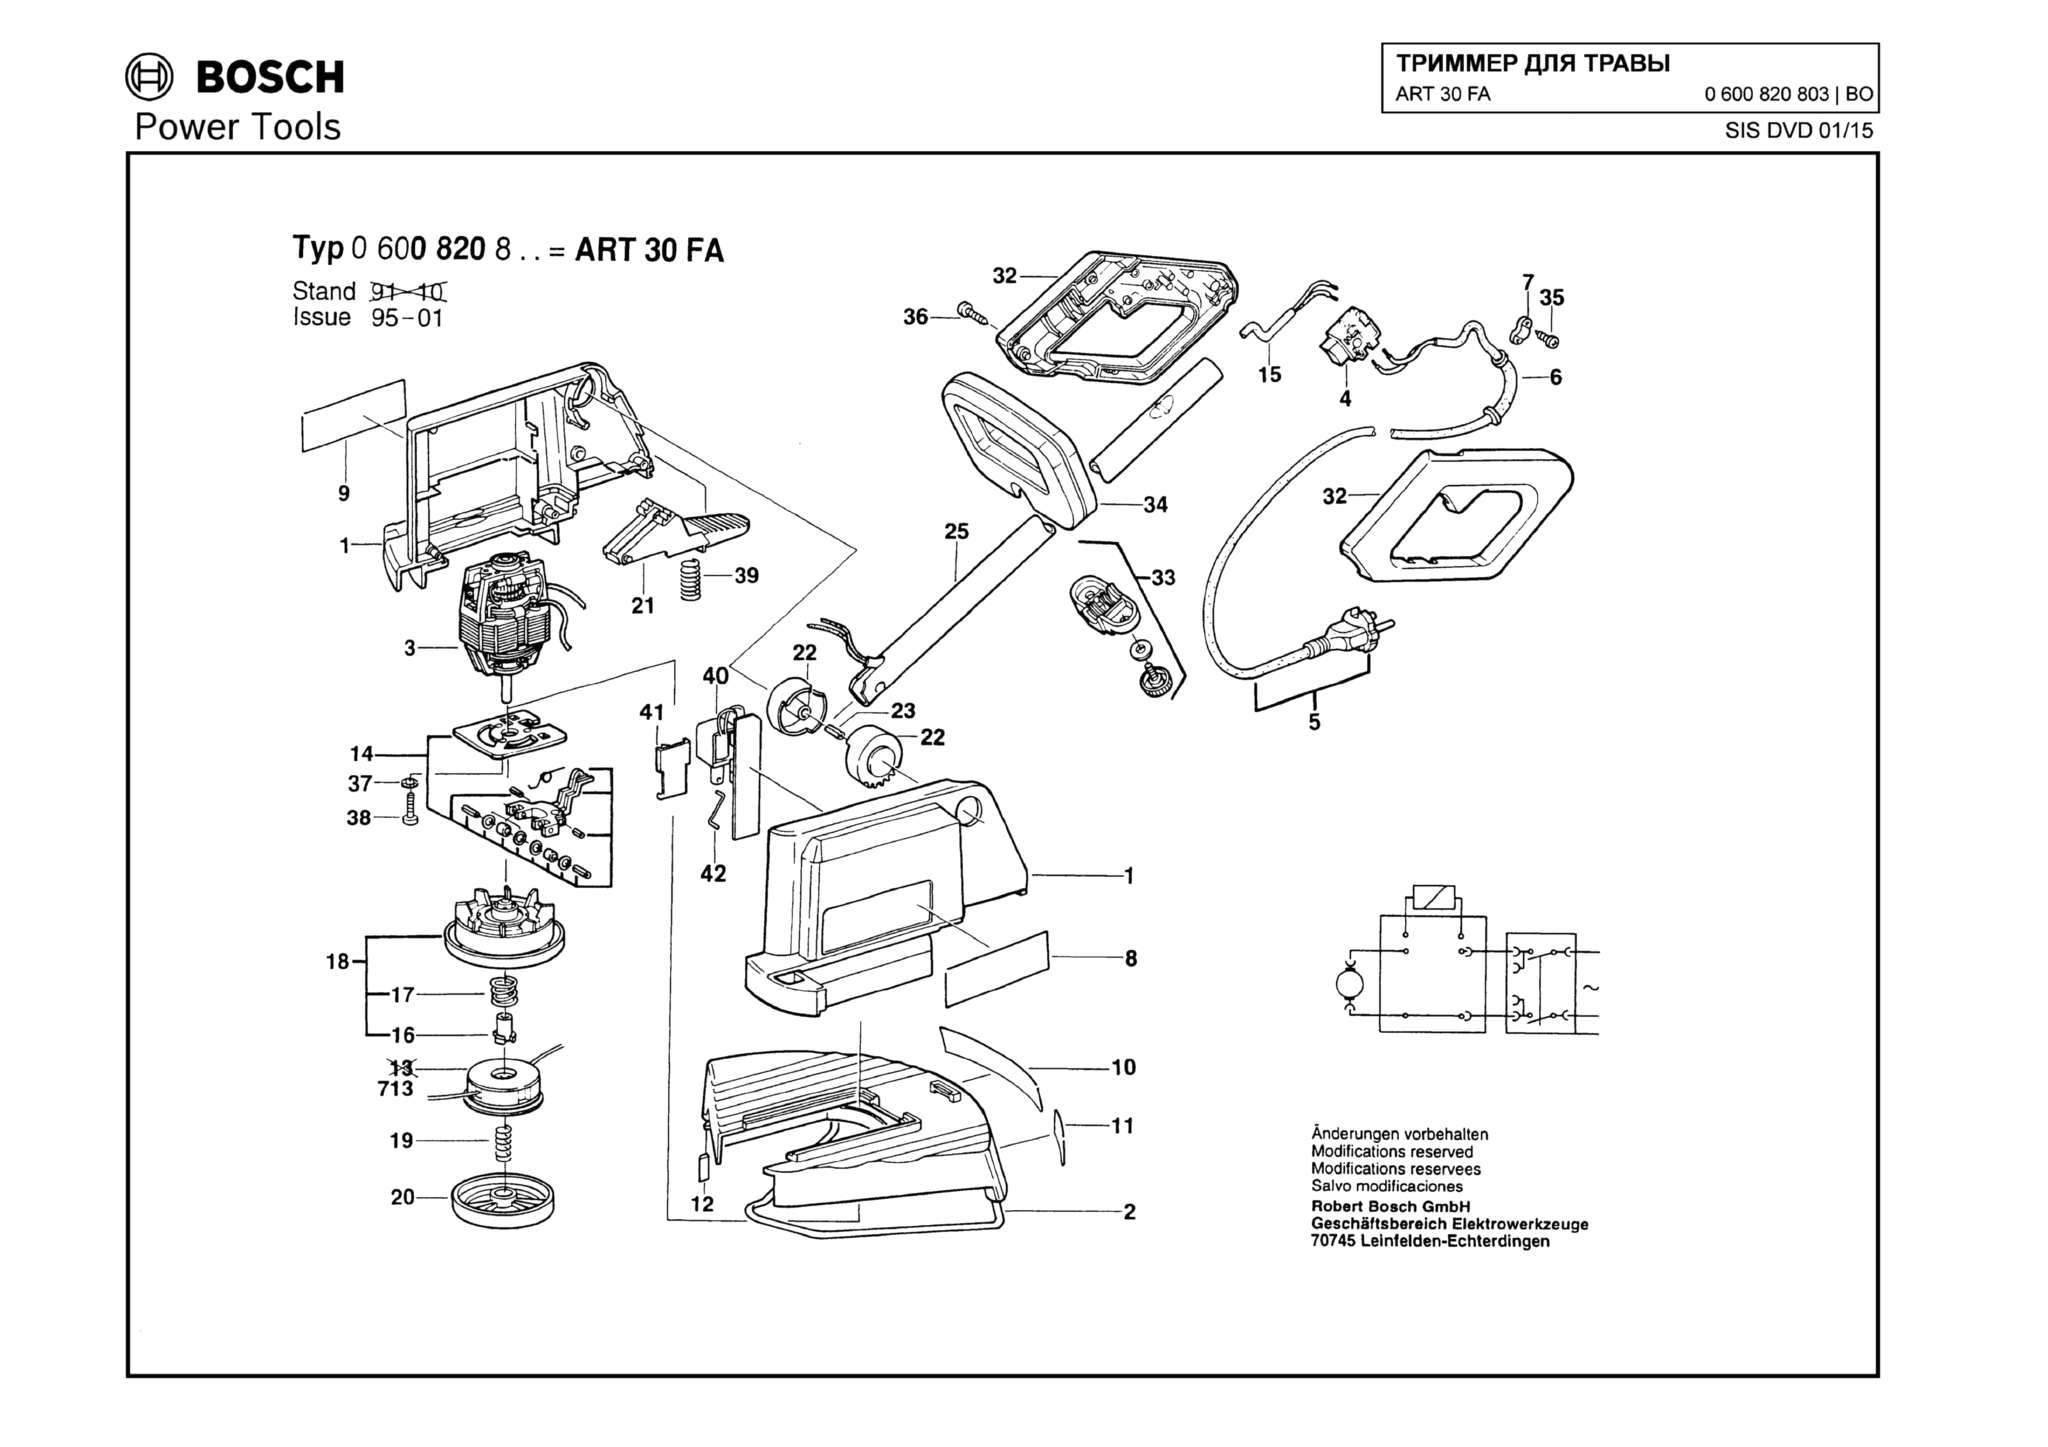 Запчасти, схема и деталировка Bosch ART 30 FA (ТИП 0600820803)